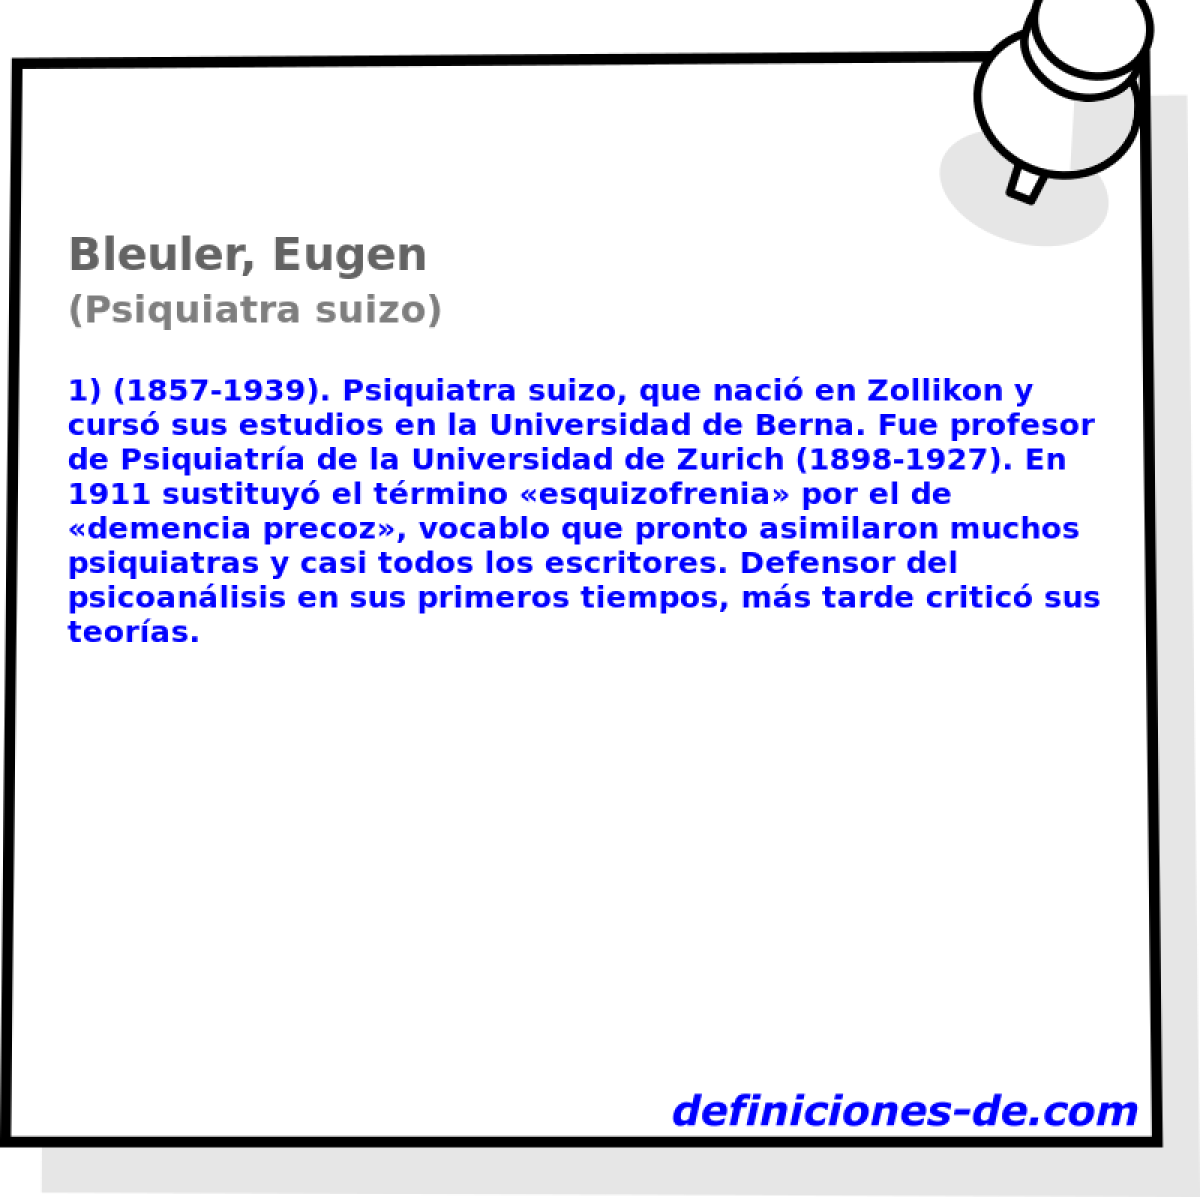 Bleuler, Eugen (Psiquiatra suizo)